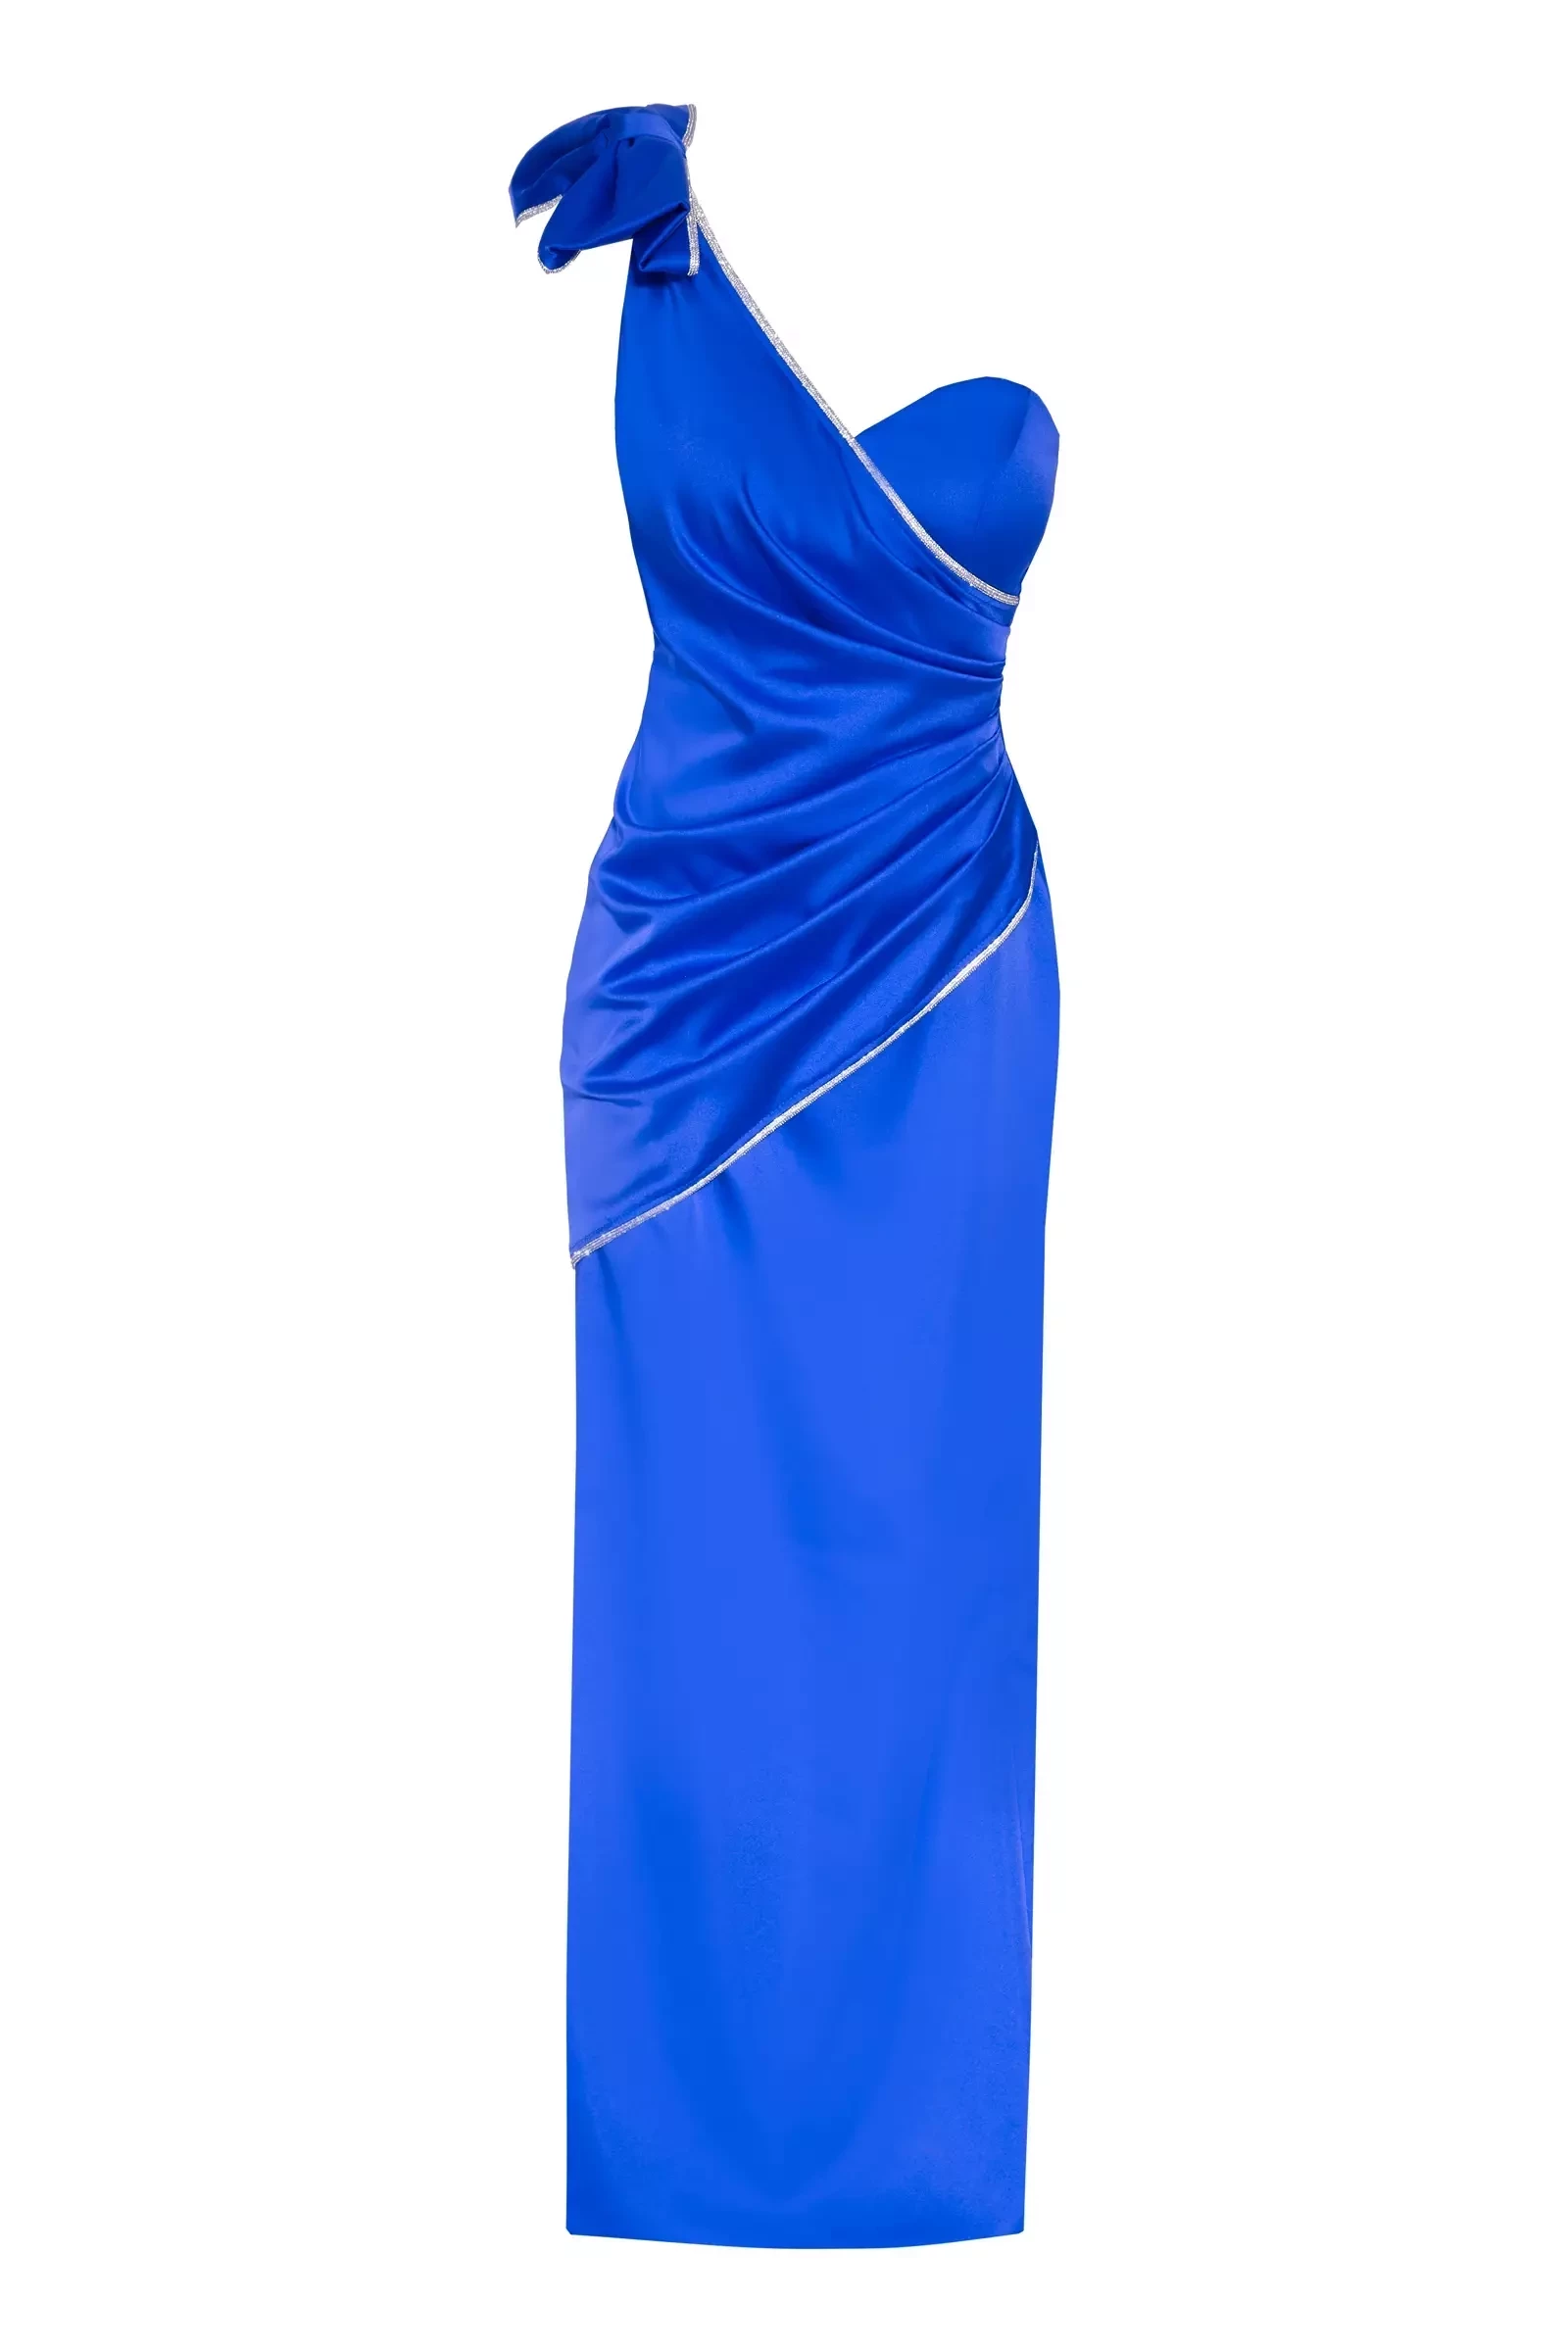 Blue satin one arm maxi dress